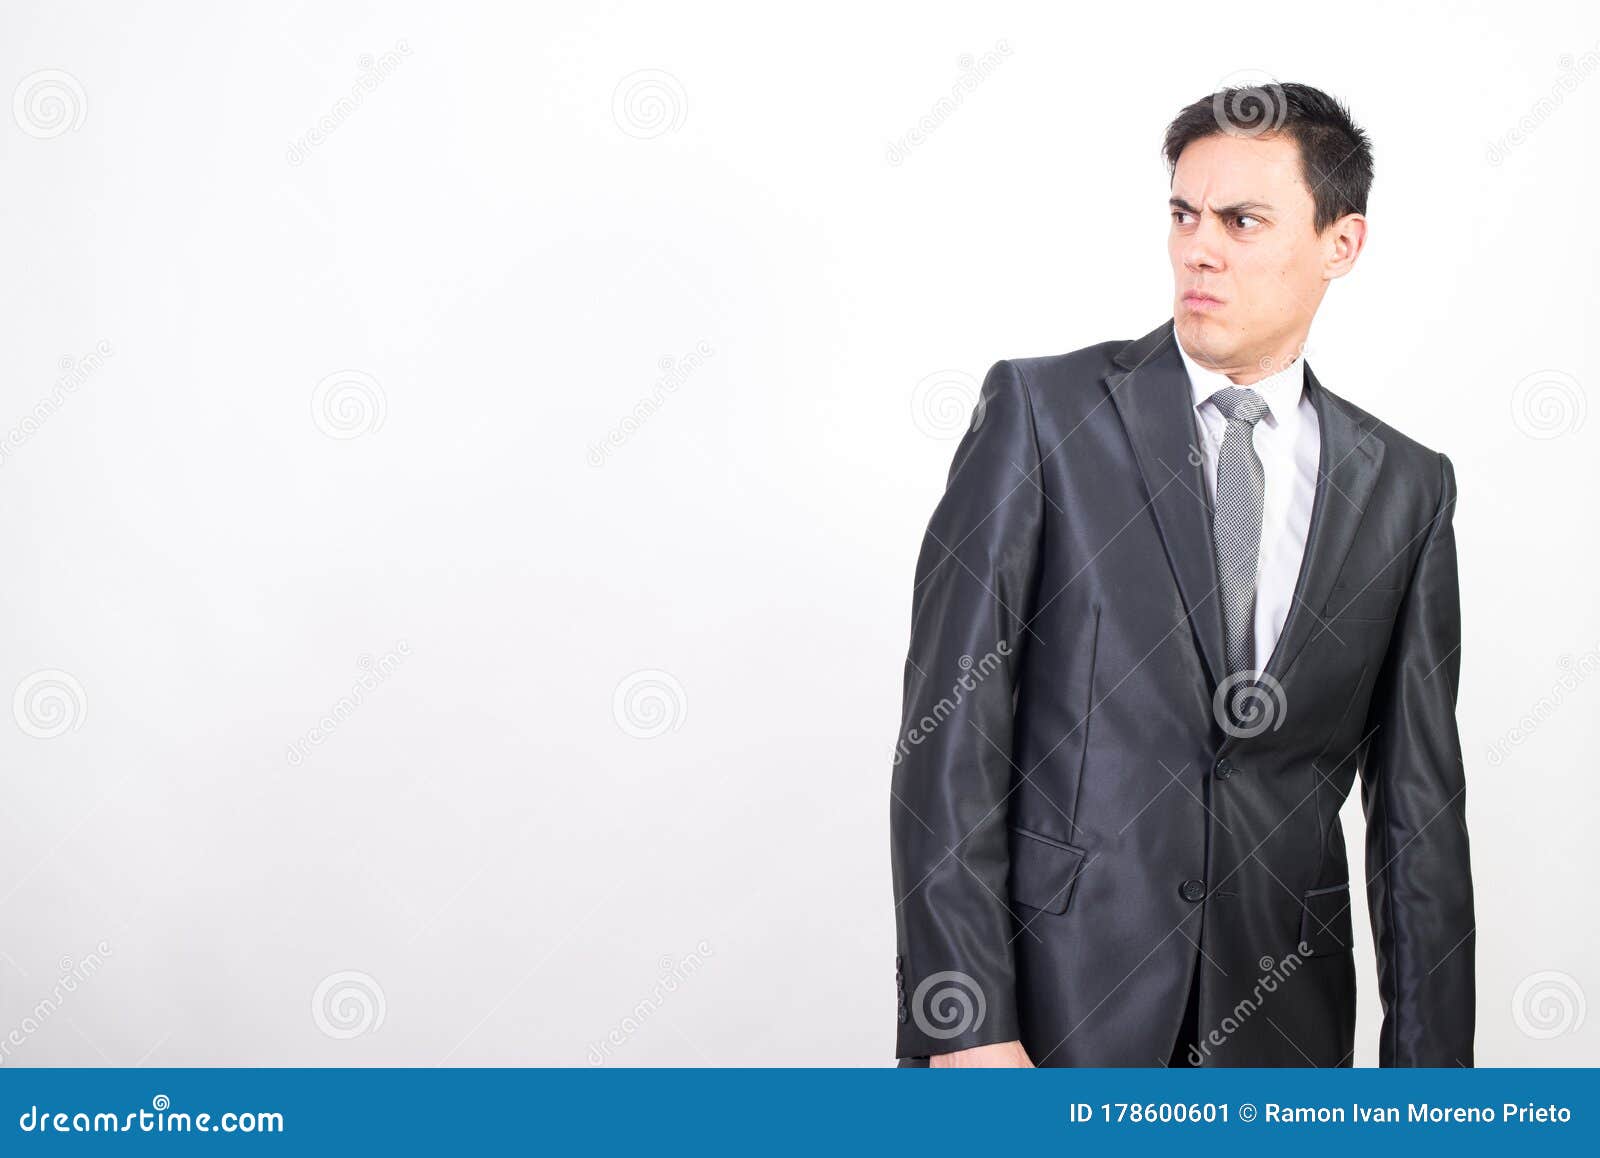 Distrustful man in suit stock image. Image of single - 178600601